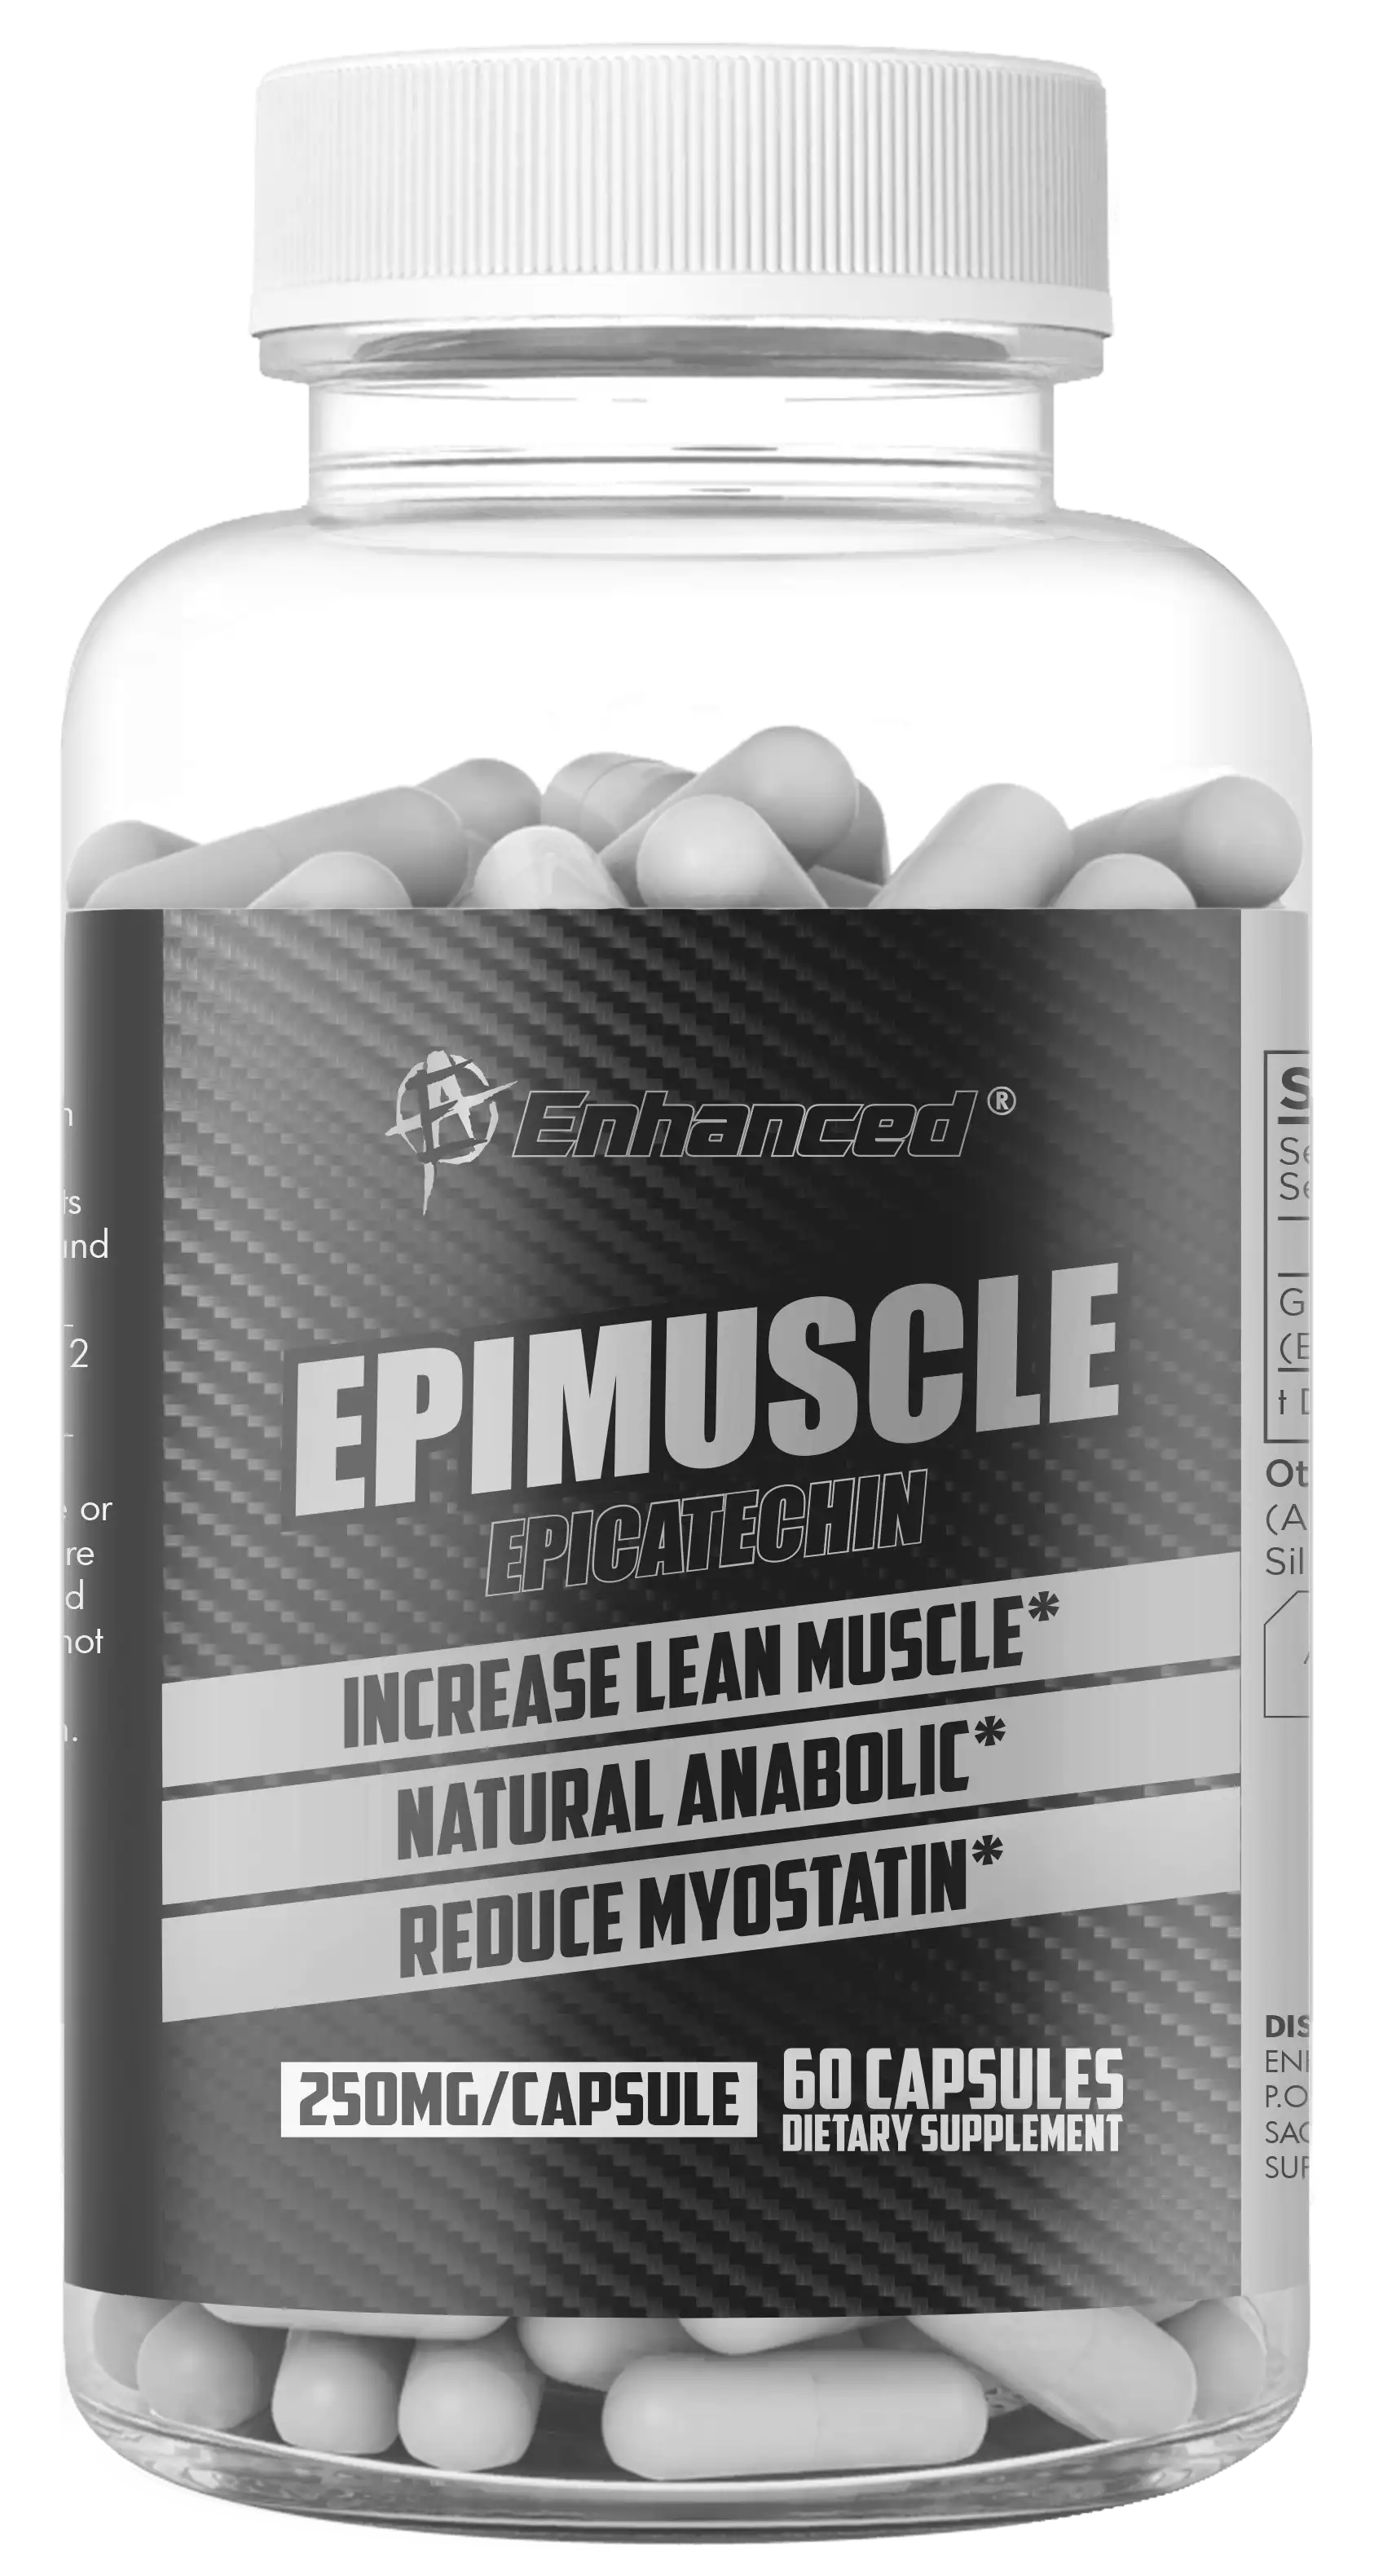 EPIMUSCLE (Epicatechin) - Enhanced